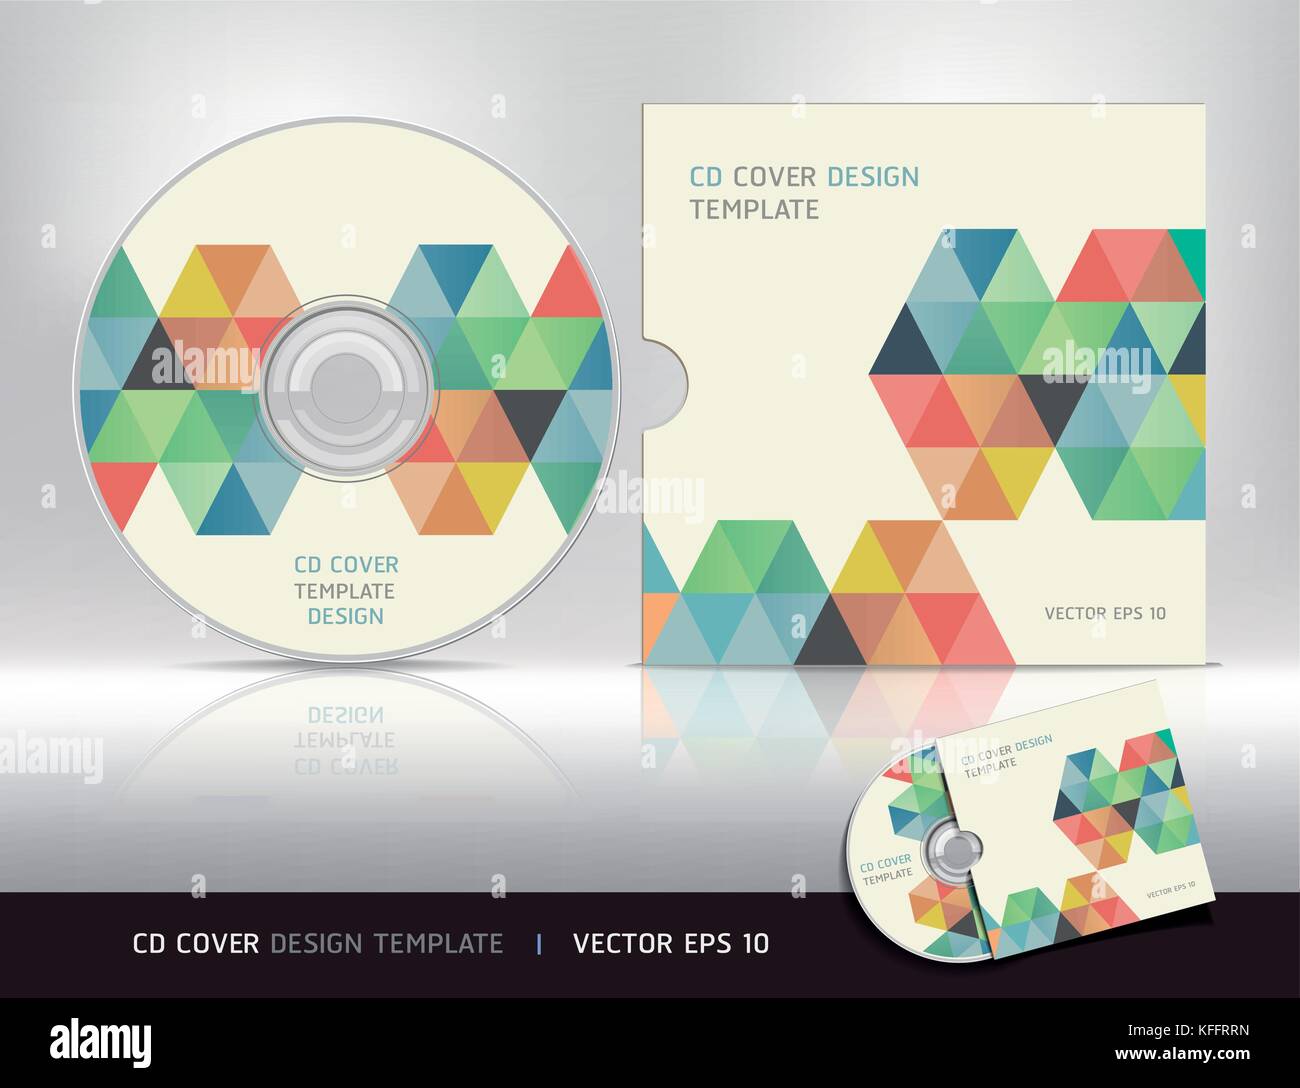 cd cover template illustrator